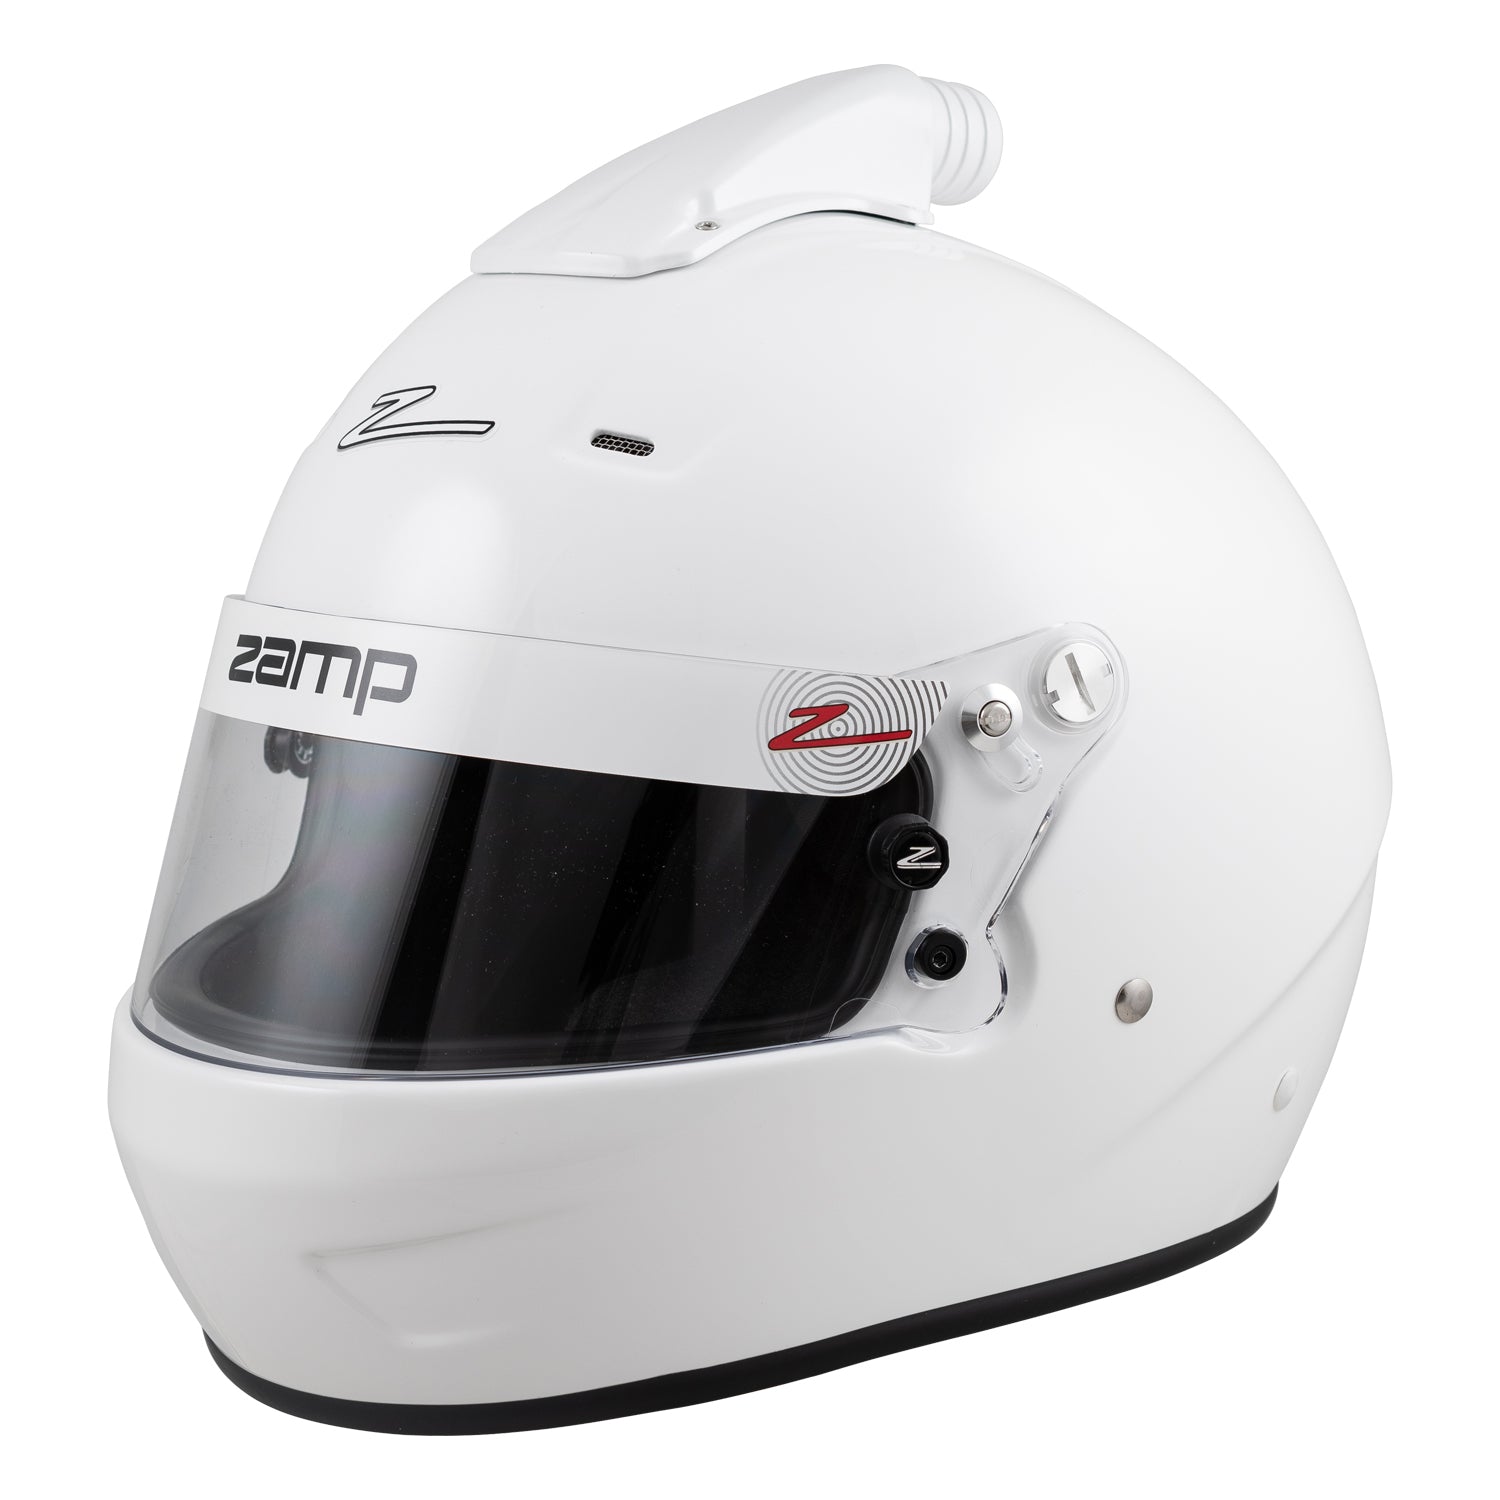 ZAMP Racing RZ-56 AIR White H771001XXX